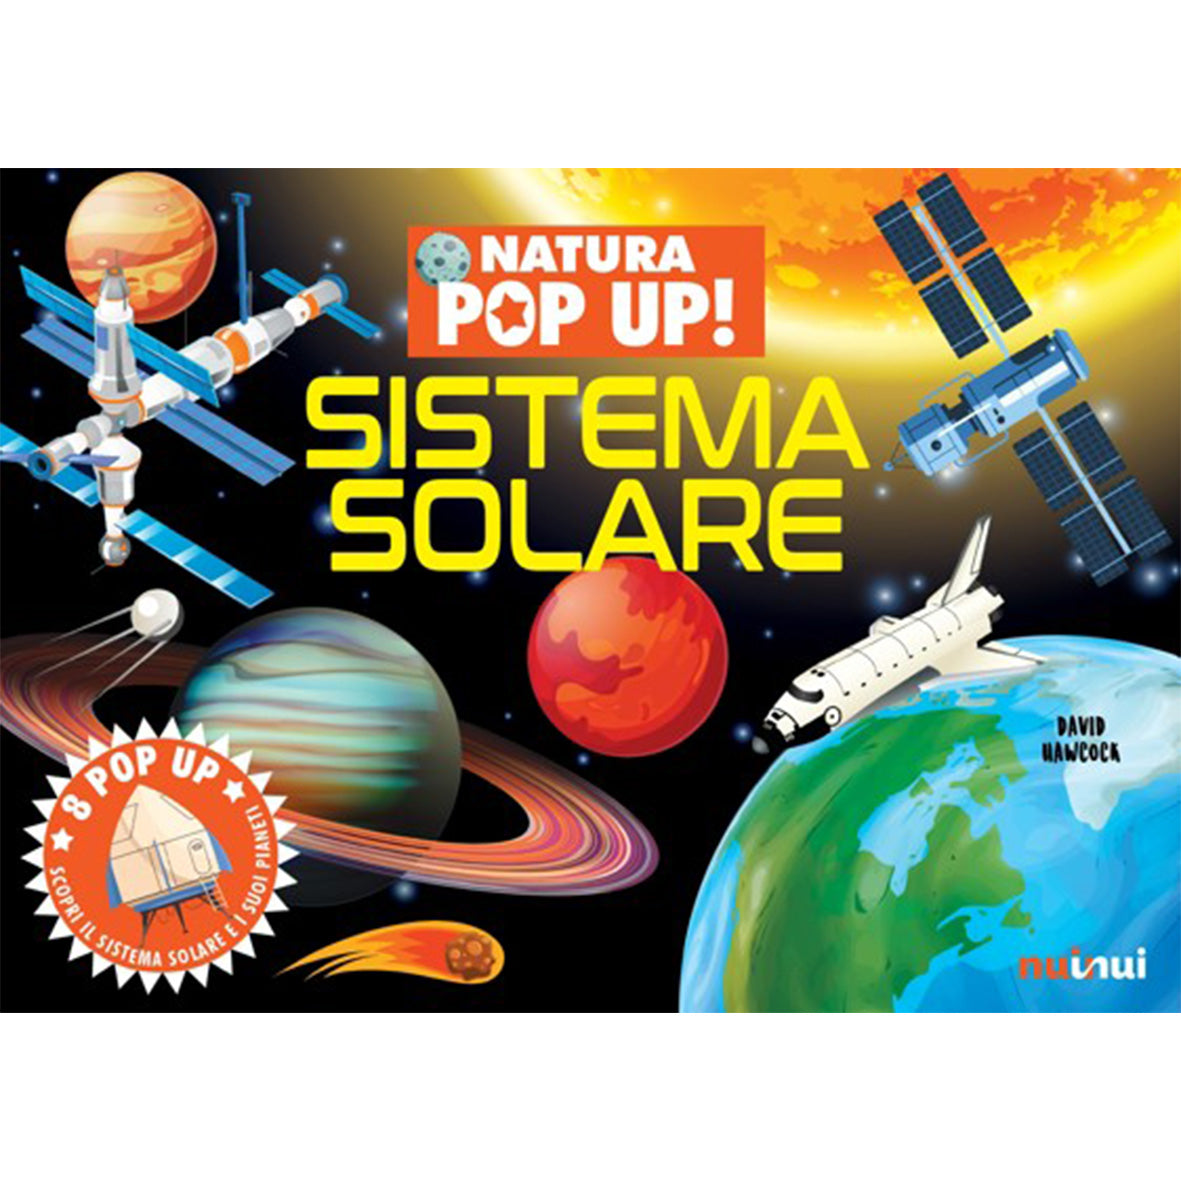 Natura pop up - Sistema solare